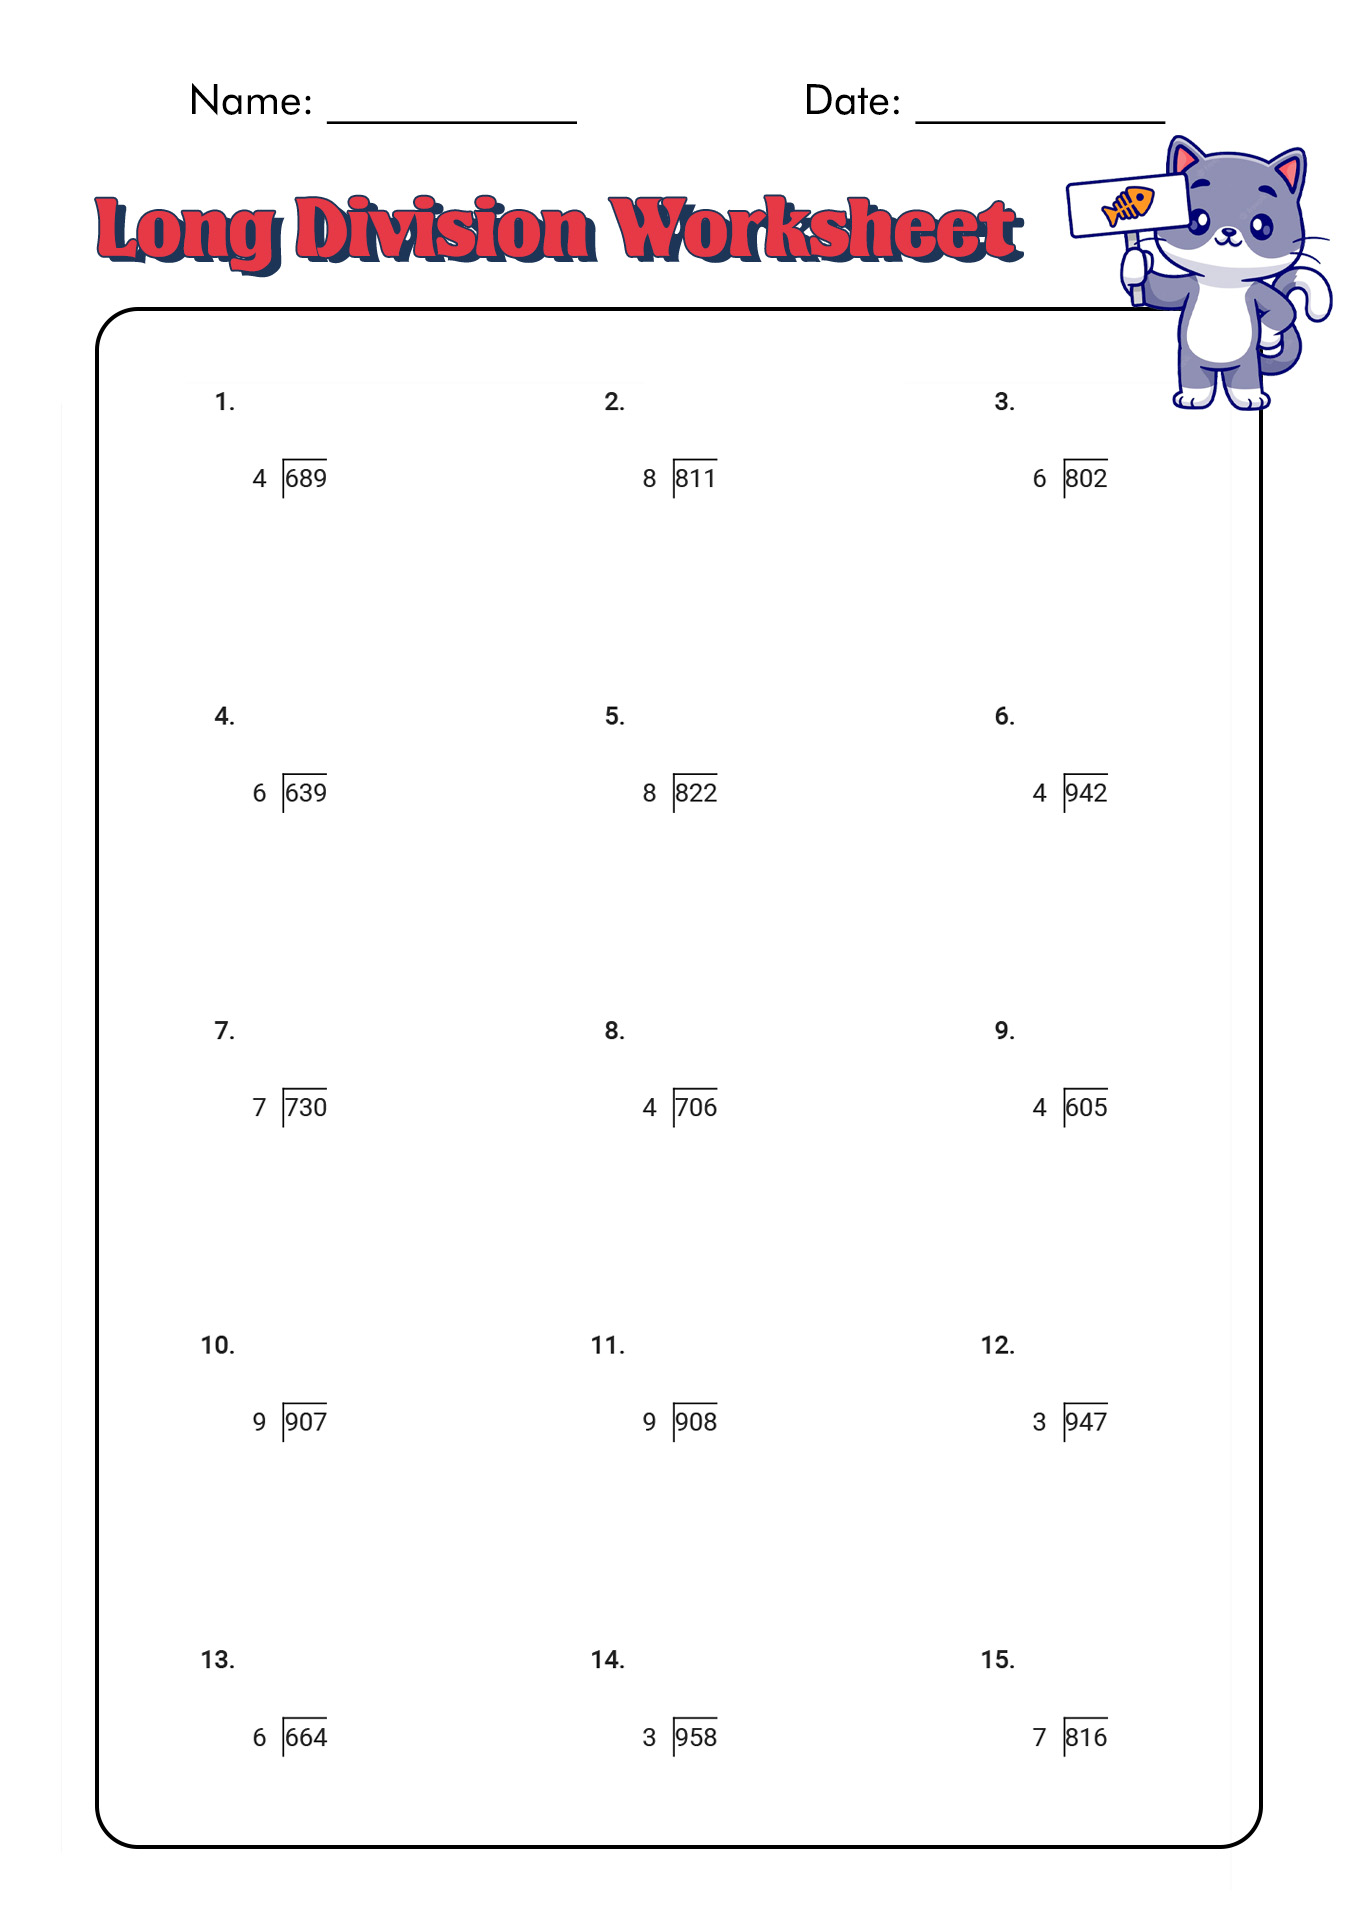 Grade Long Division Worksheet Image